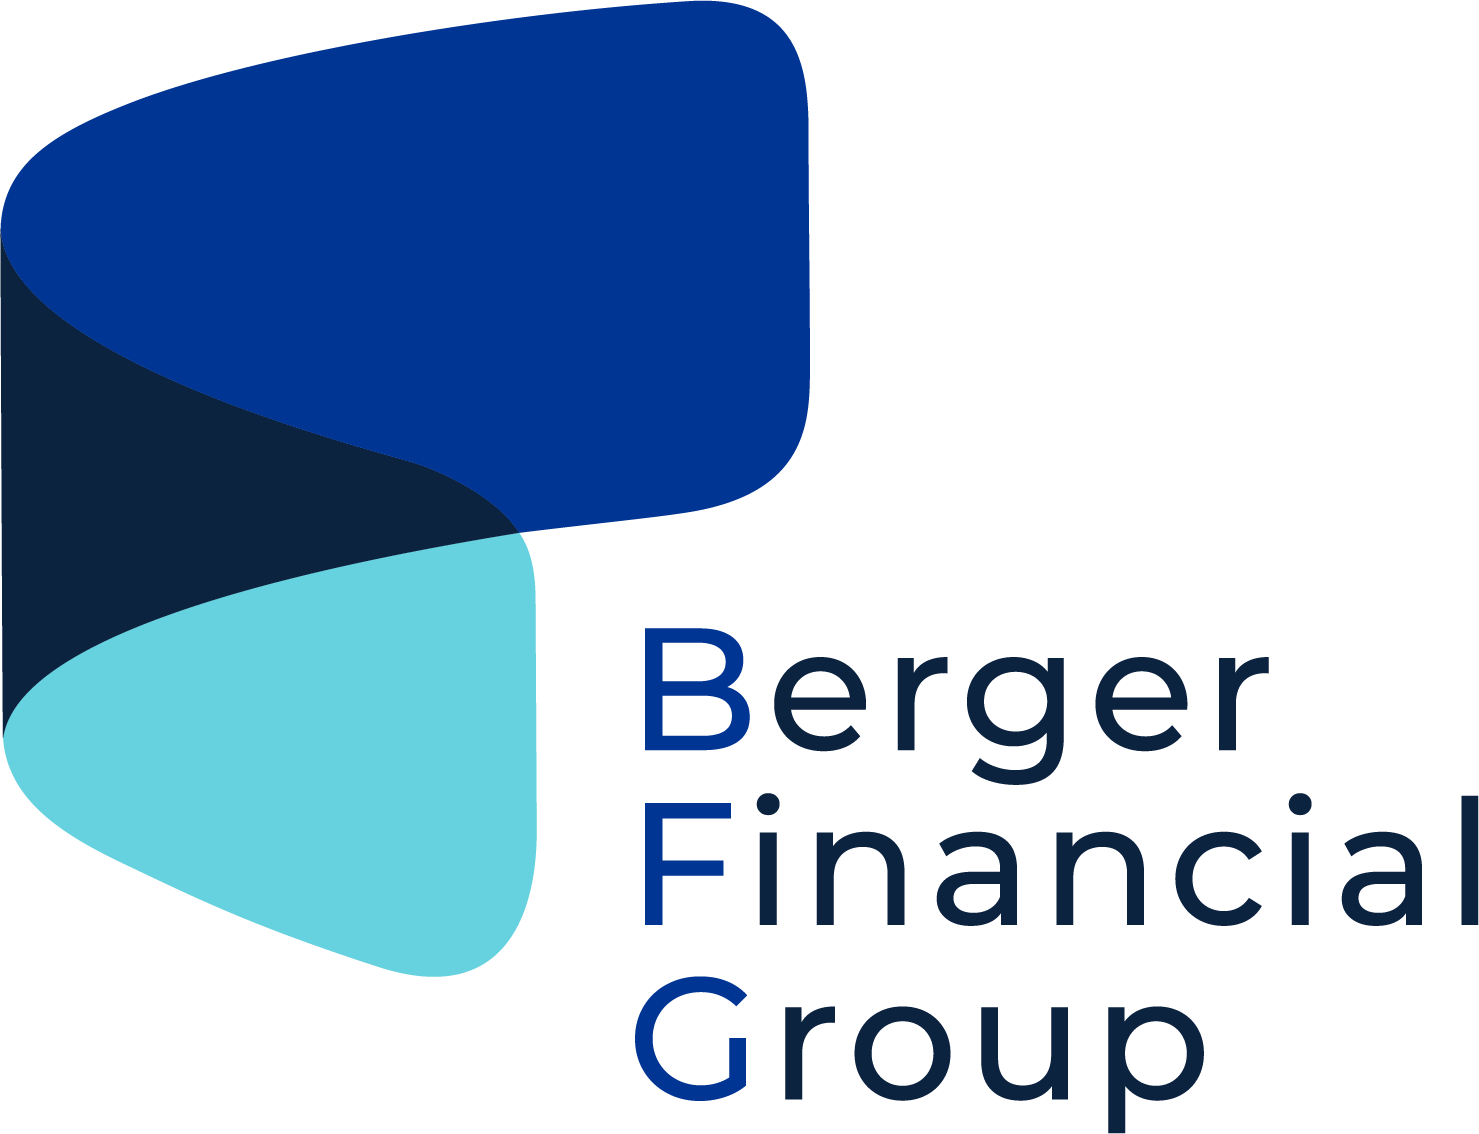 Berger Financial Group